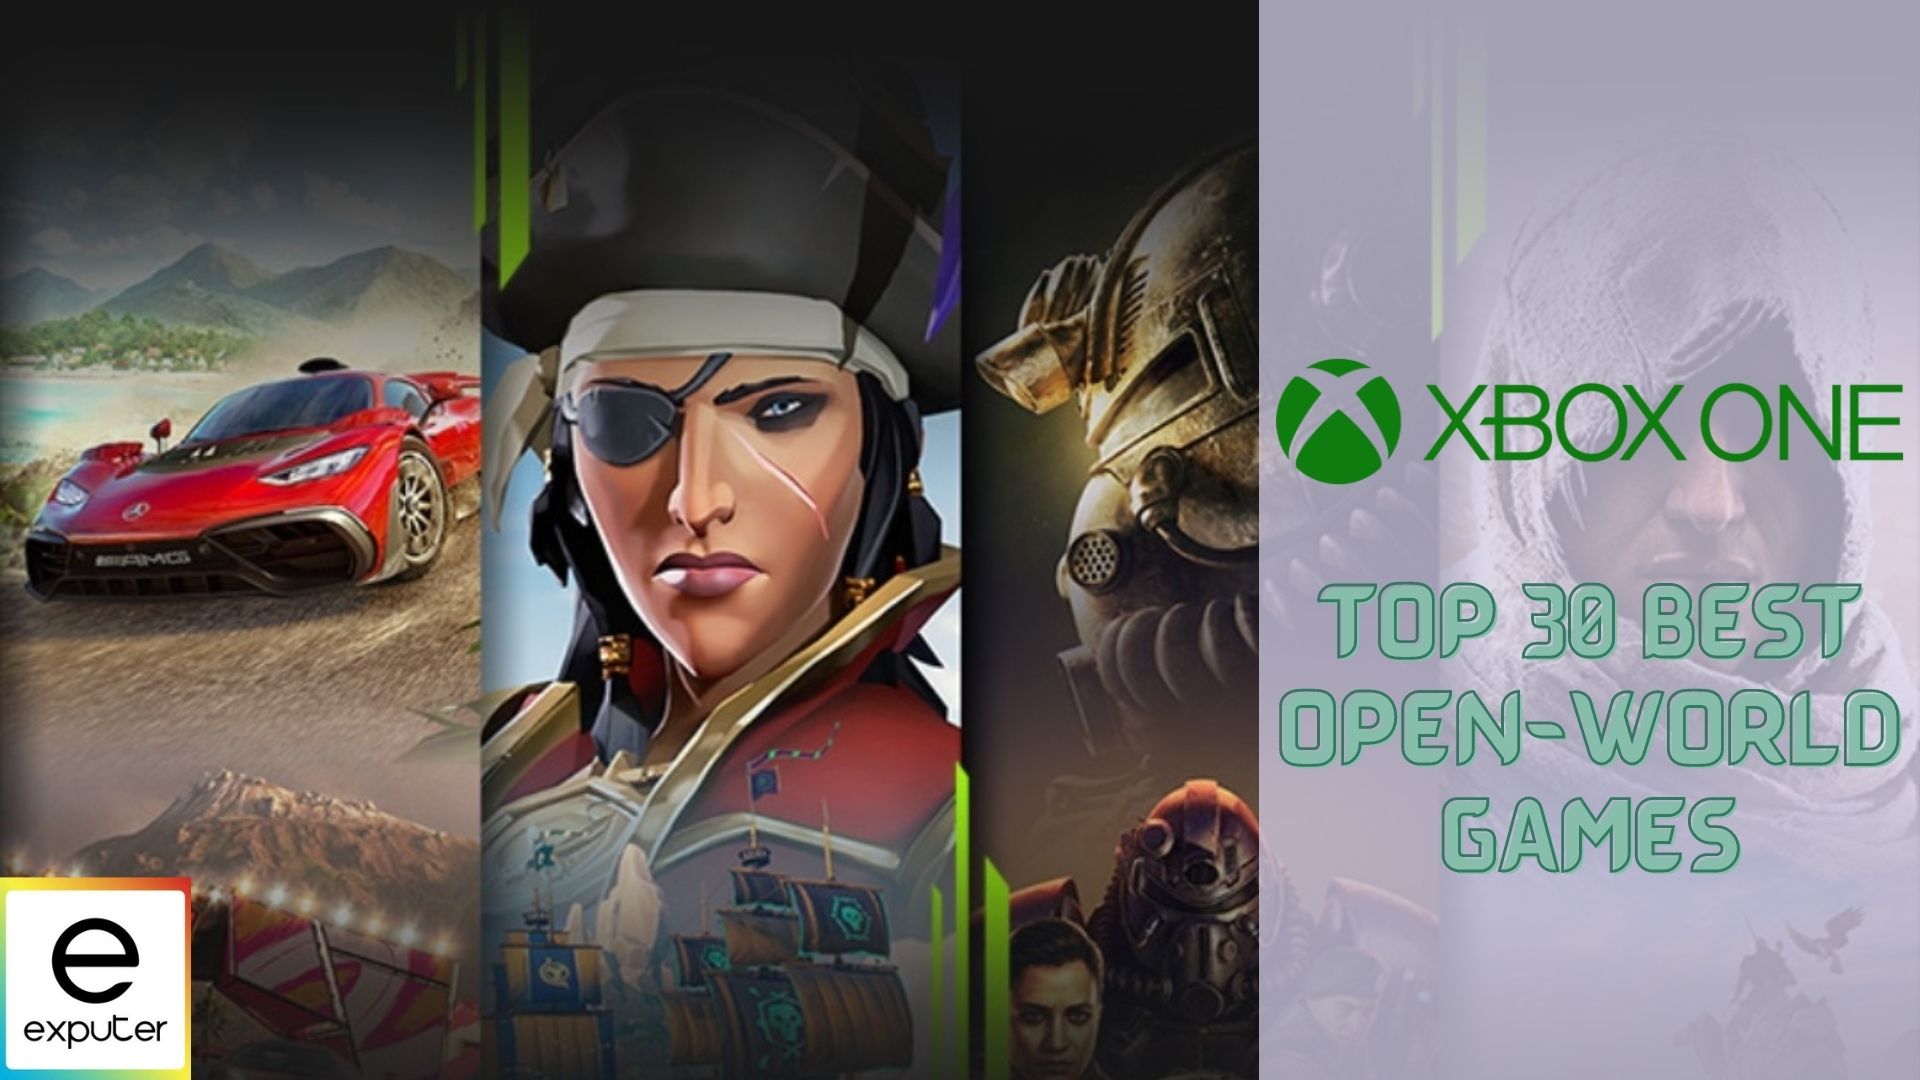 streep tobben Superioriteit 30 BEST Open World Games For Xbox One - eXputer.com